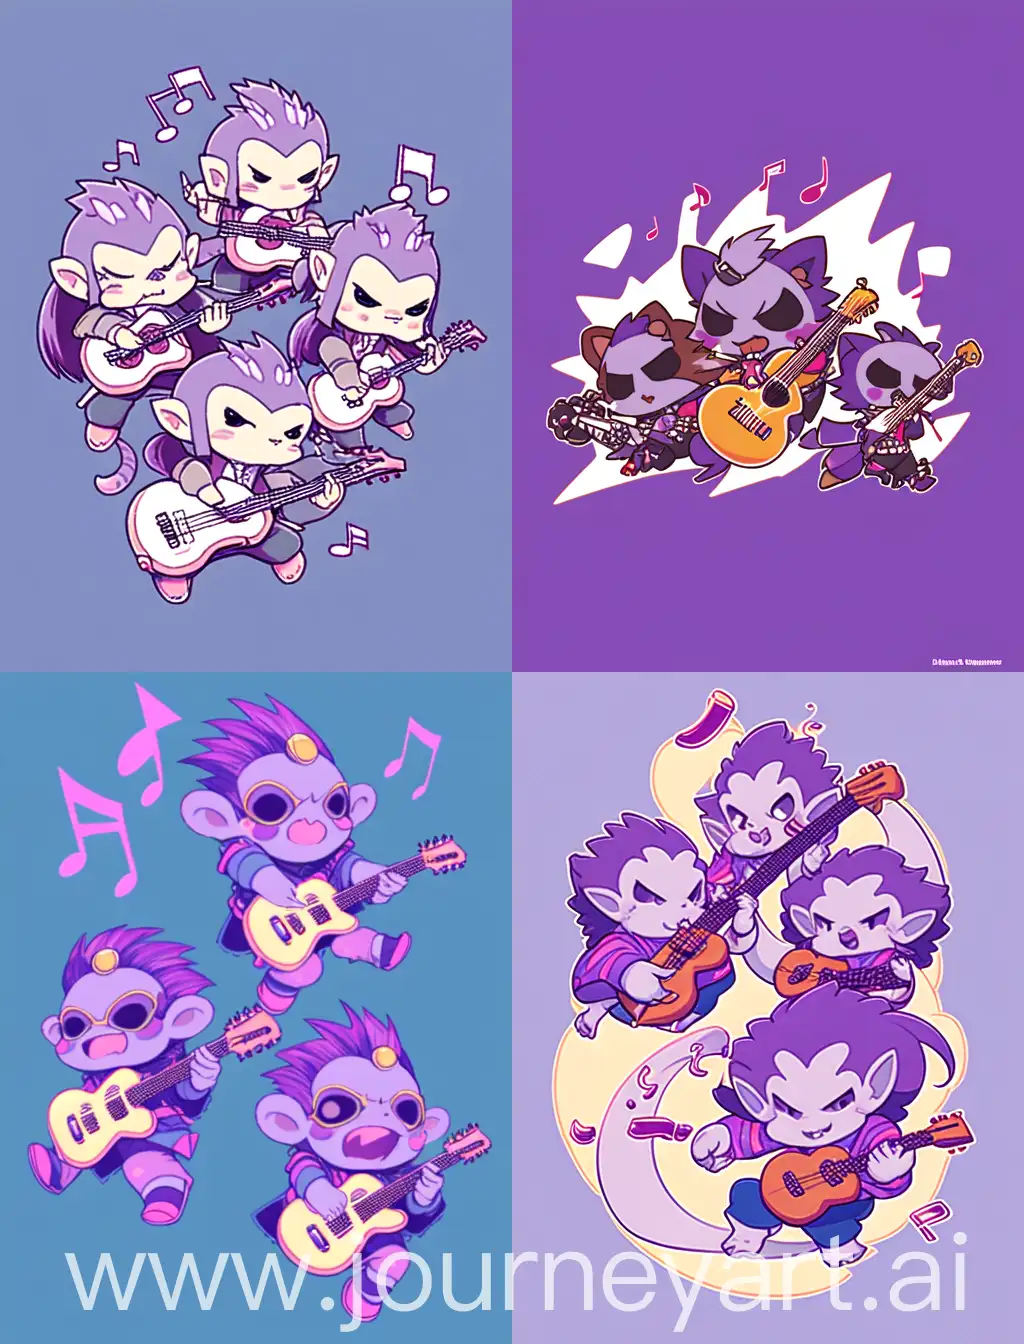 Playful-Chibi-Monkeys-Strumming-Guitars-Against-Vibrant-Purple-Background